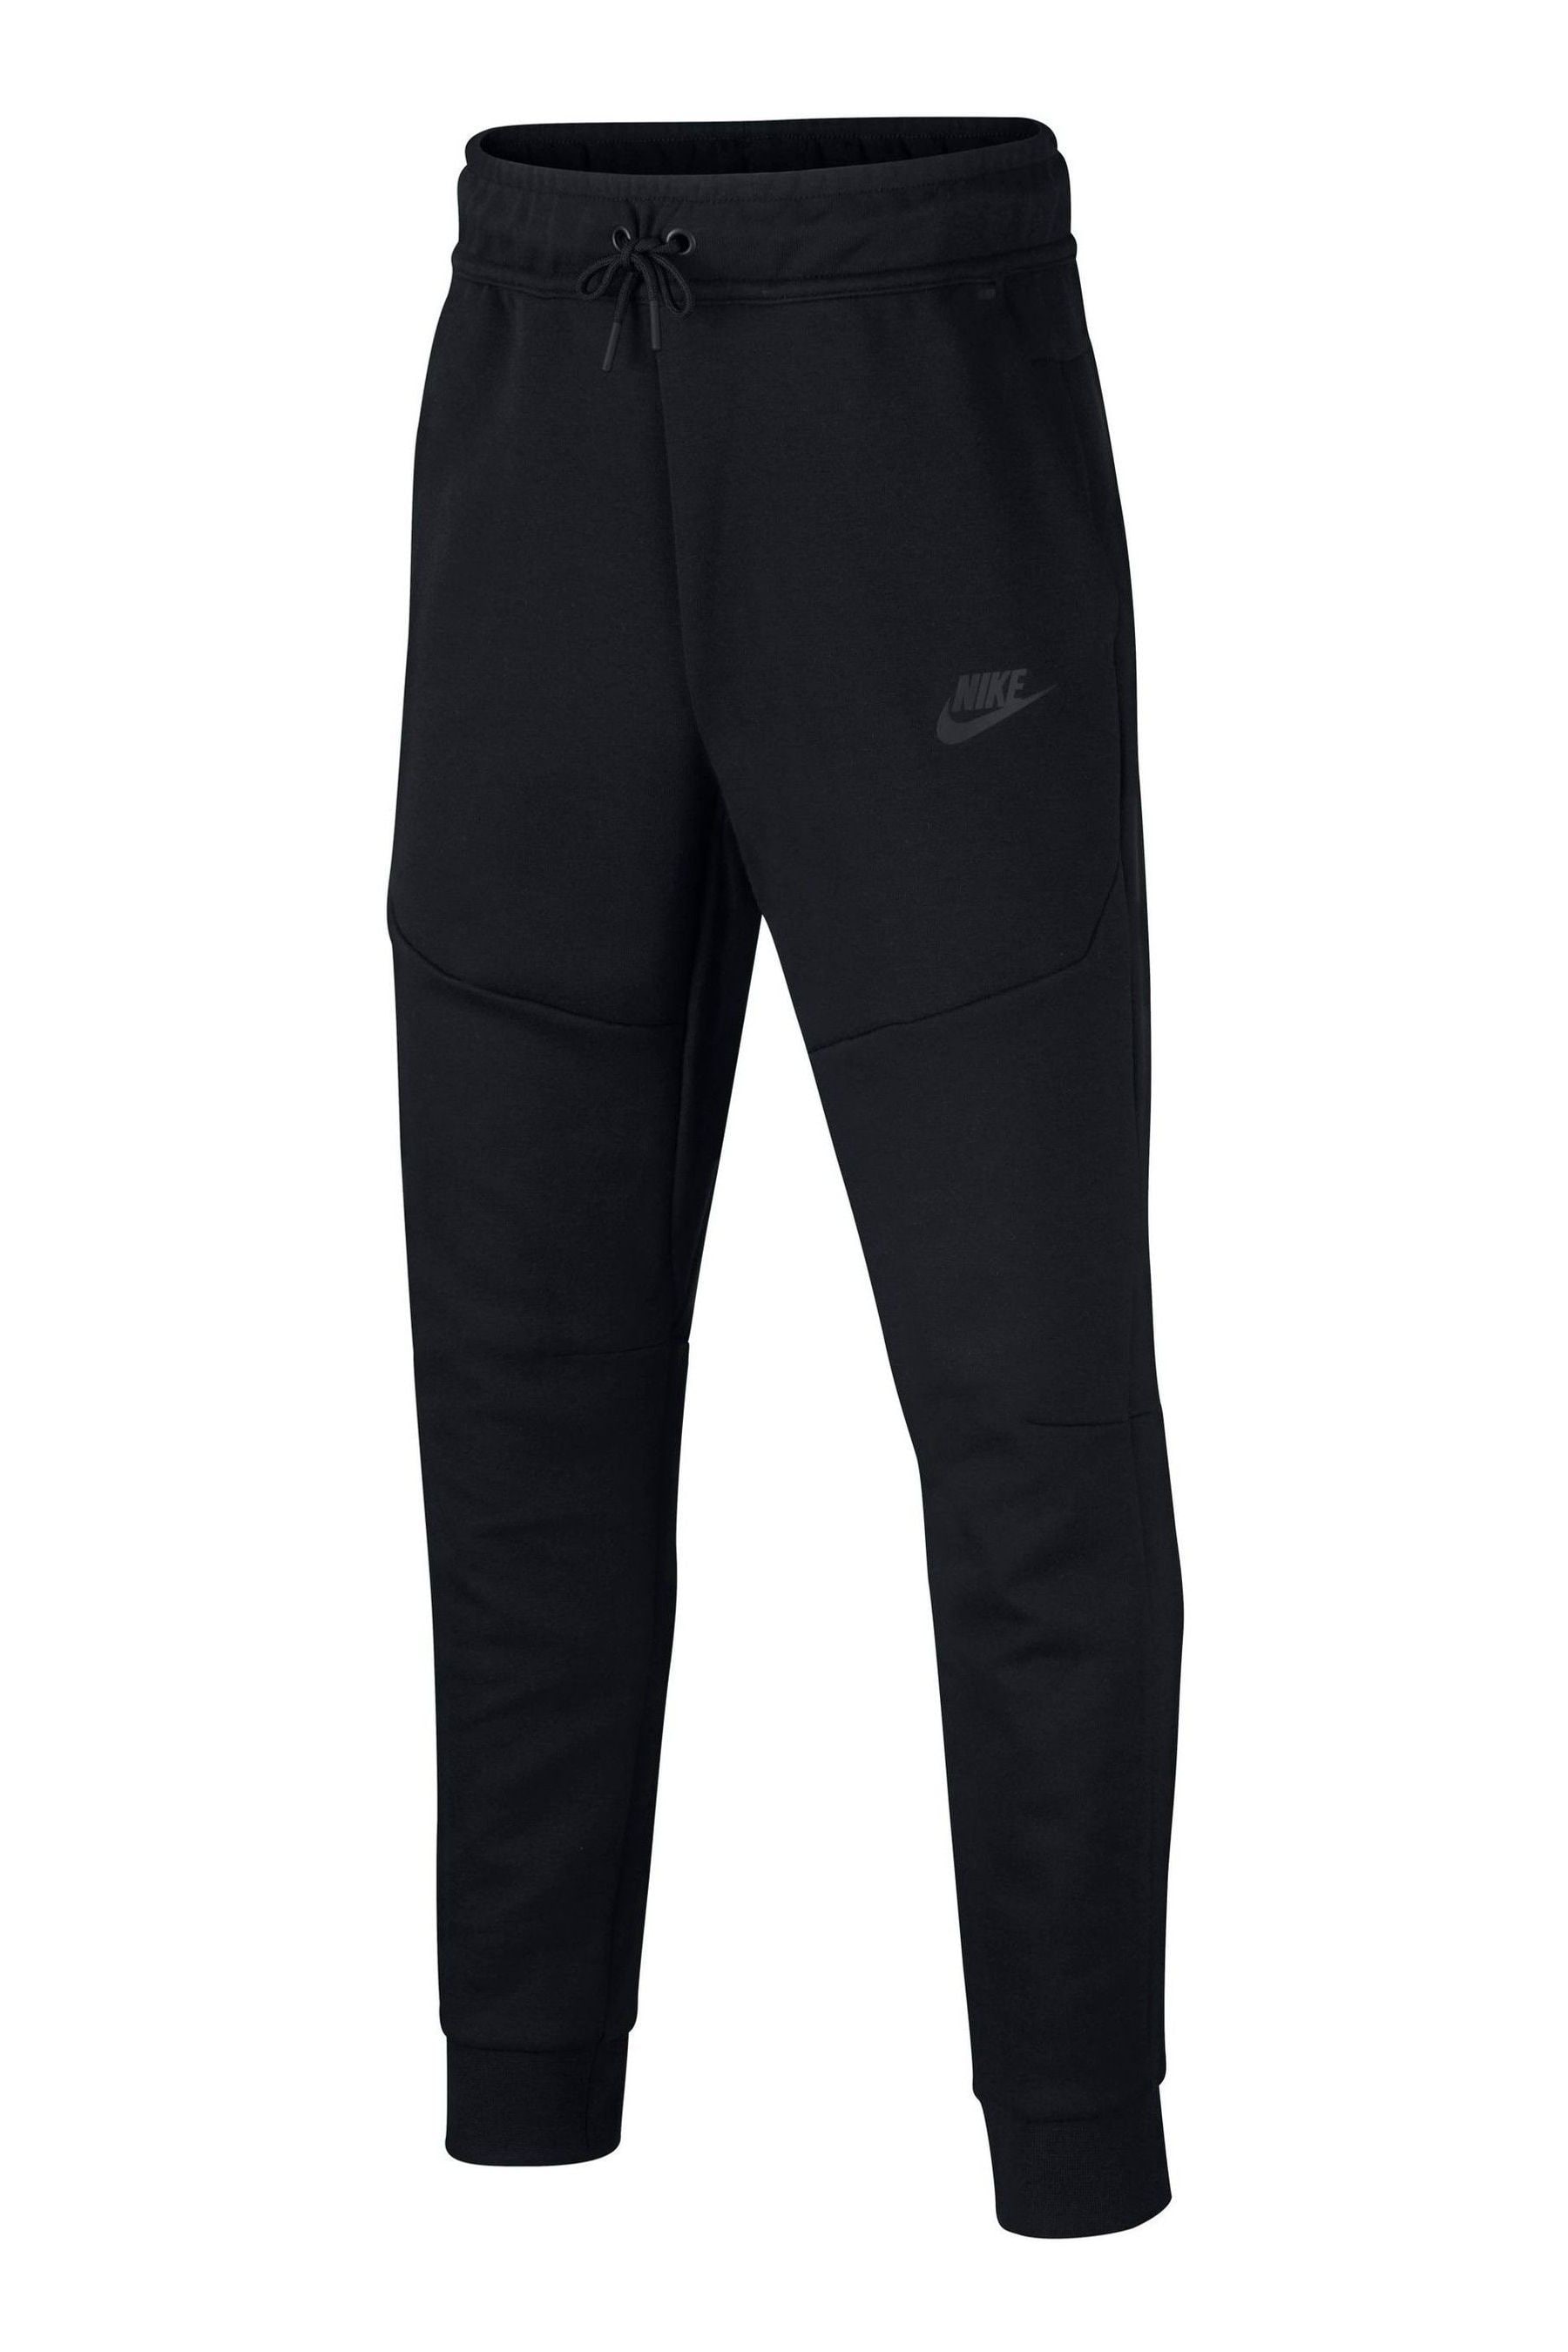 Buy Nike Black Tech Fleece Joggers from the Next UK online shop